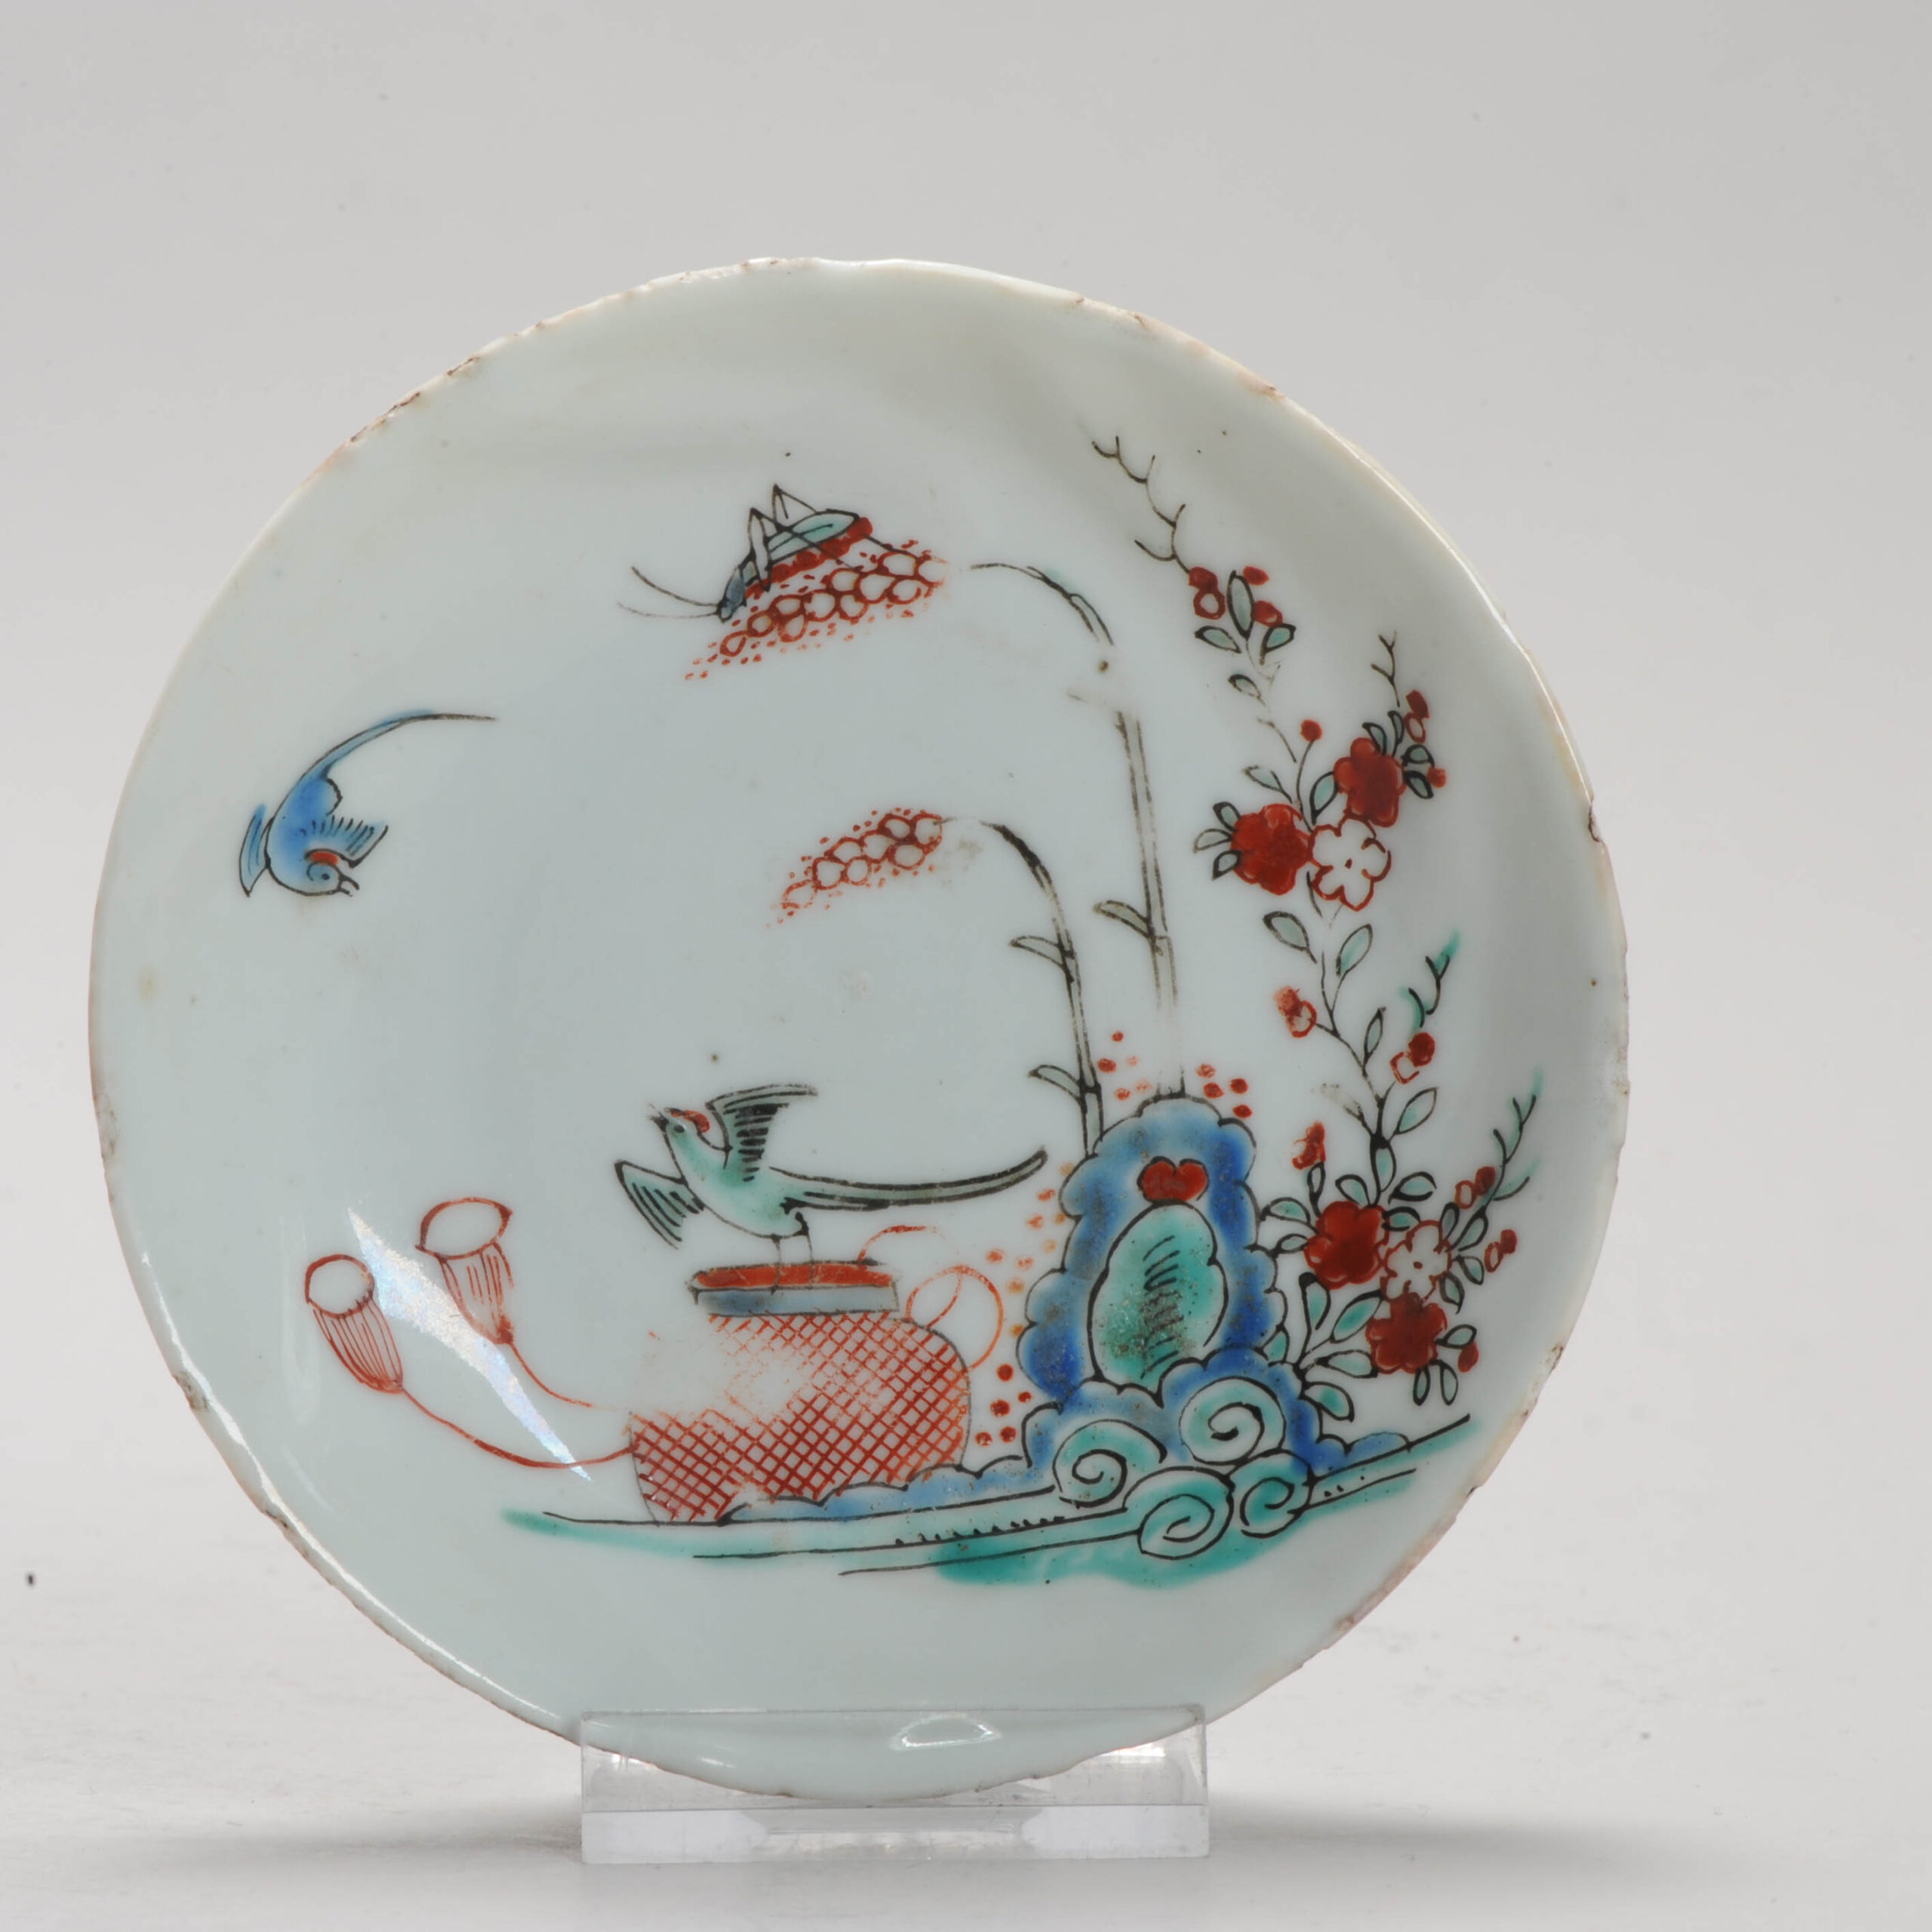 1155 Antique Chinese porcelain plate with Amsterdam Bont Kakiemon Decoration